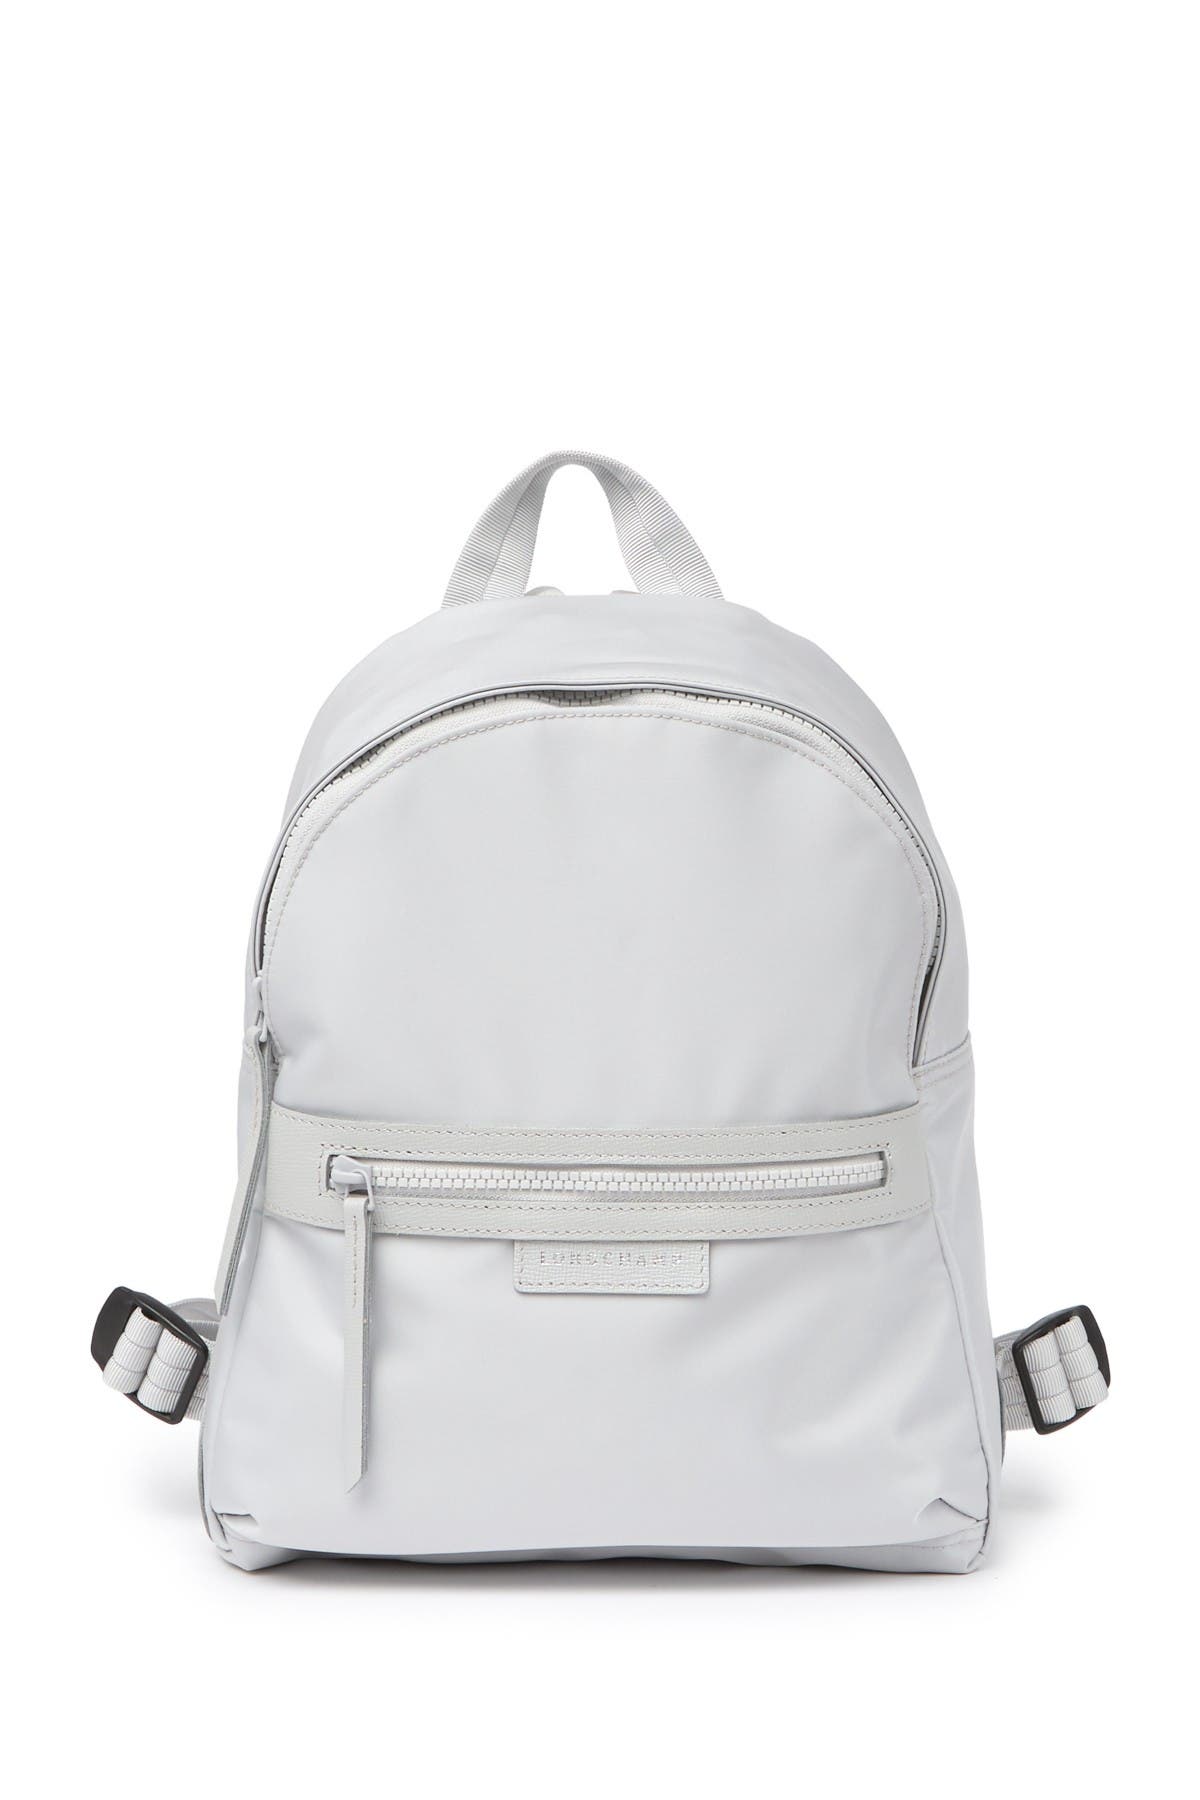 longchamp neo backpack small